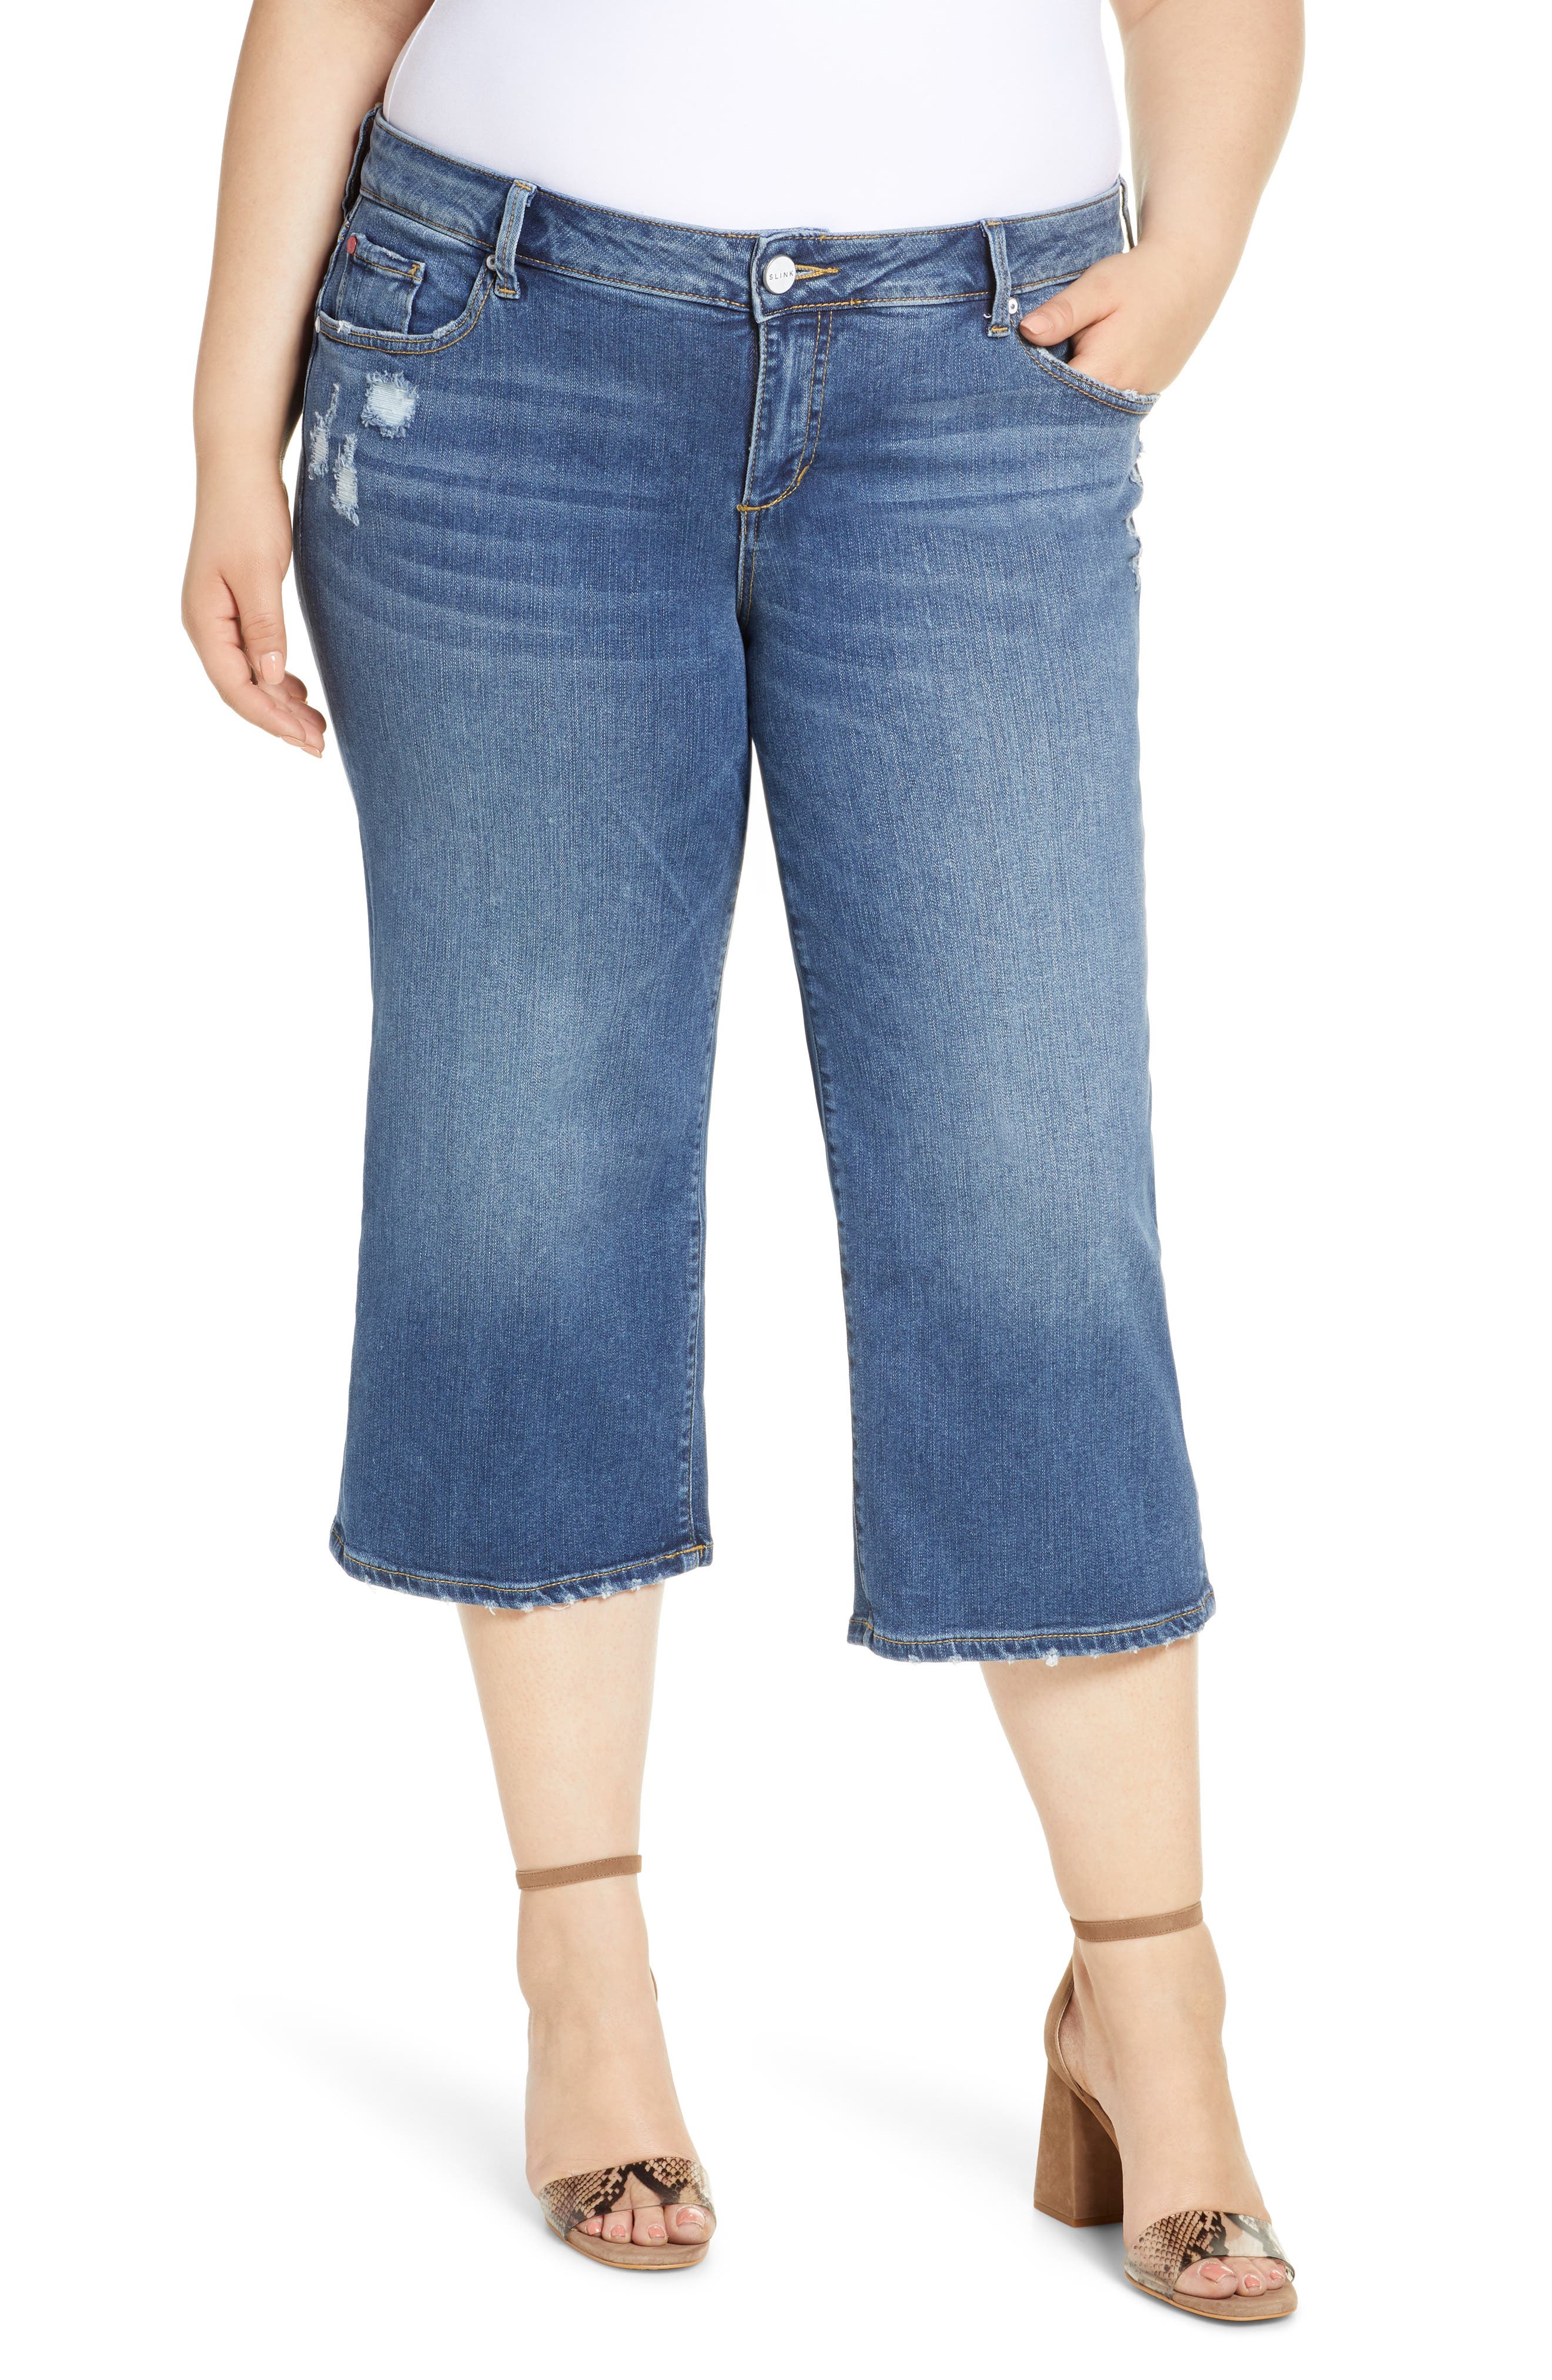 wide leg capri jeans plus size